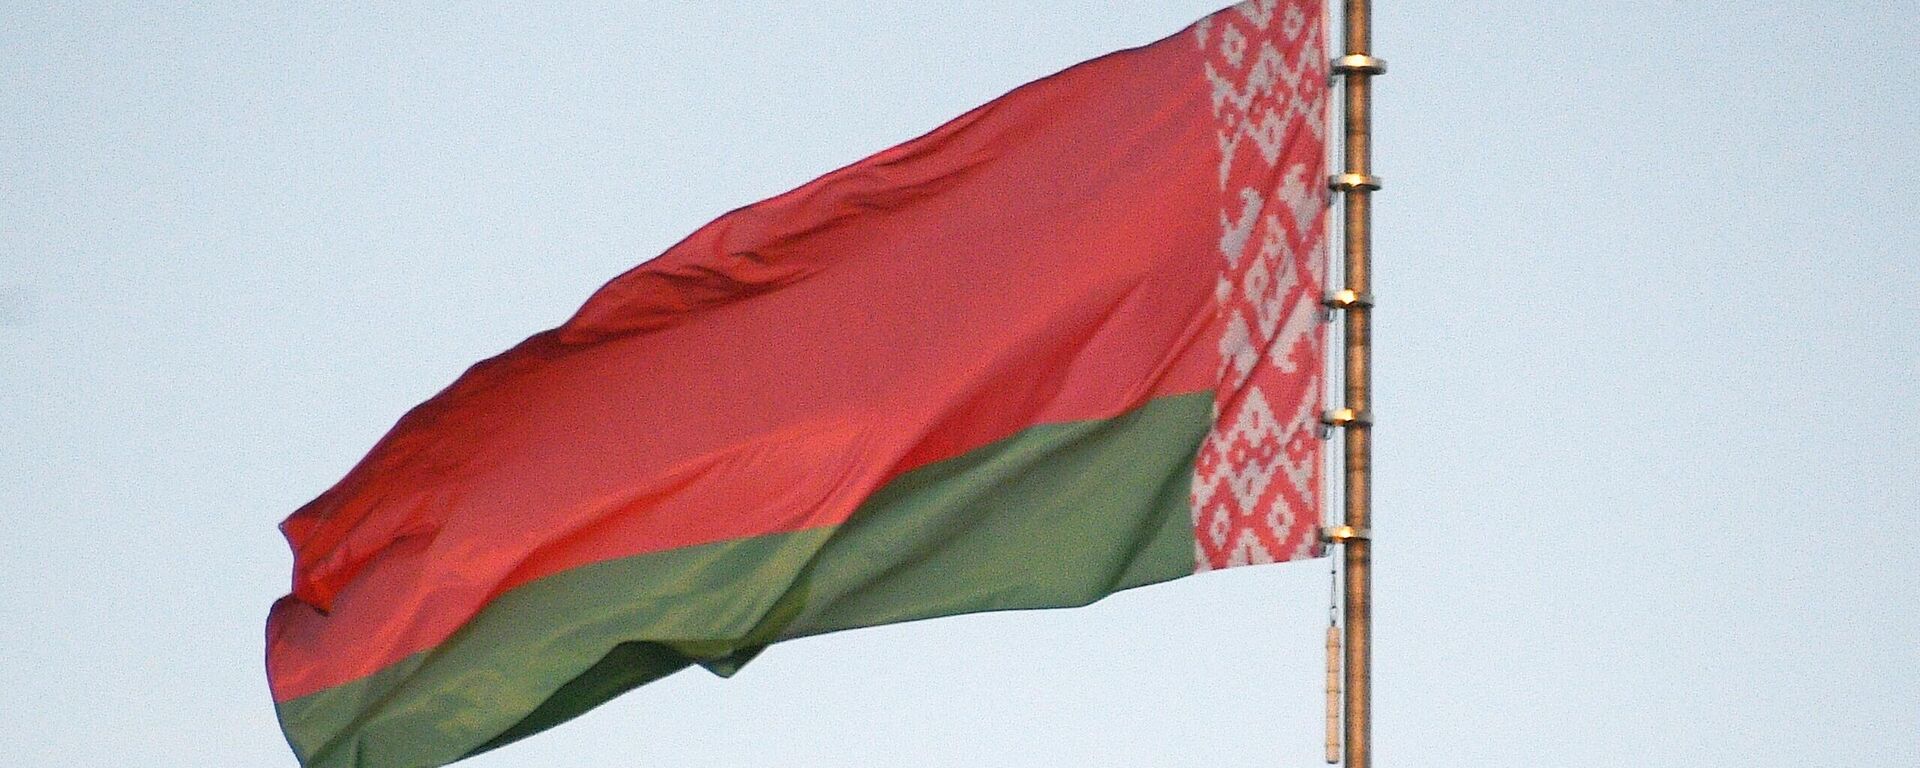 Флаг Белоруссии во время акции протеста в Минске - Sputnik Литва, 1920, 29.07.2021